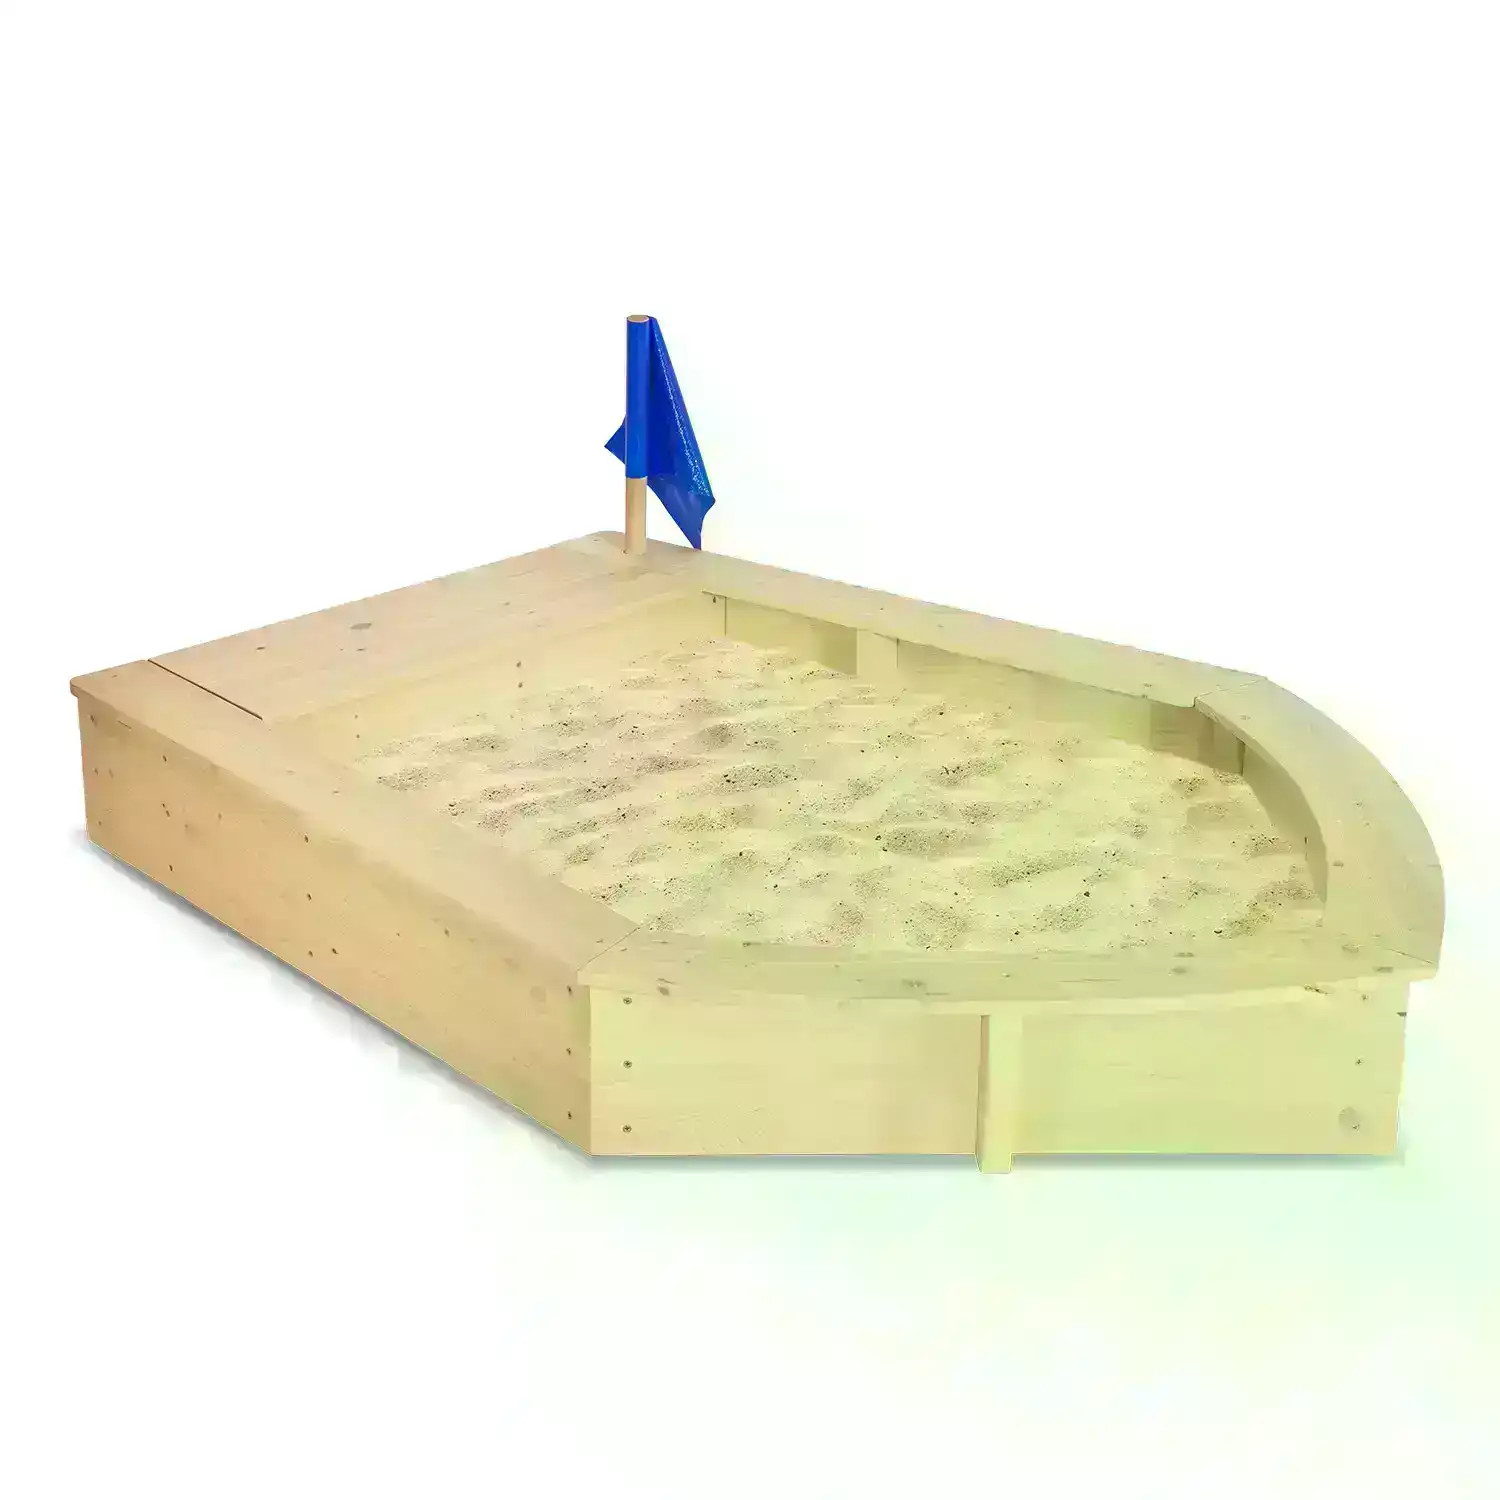 Lifespan Kids Boat Sandpit